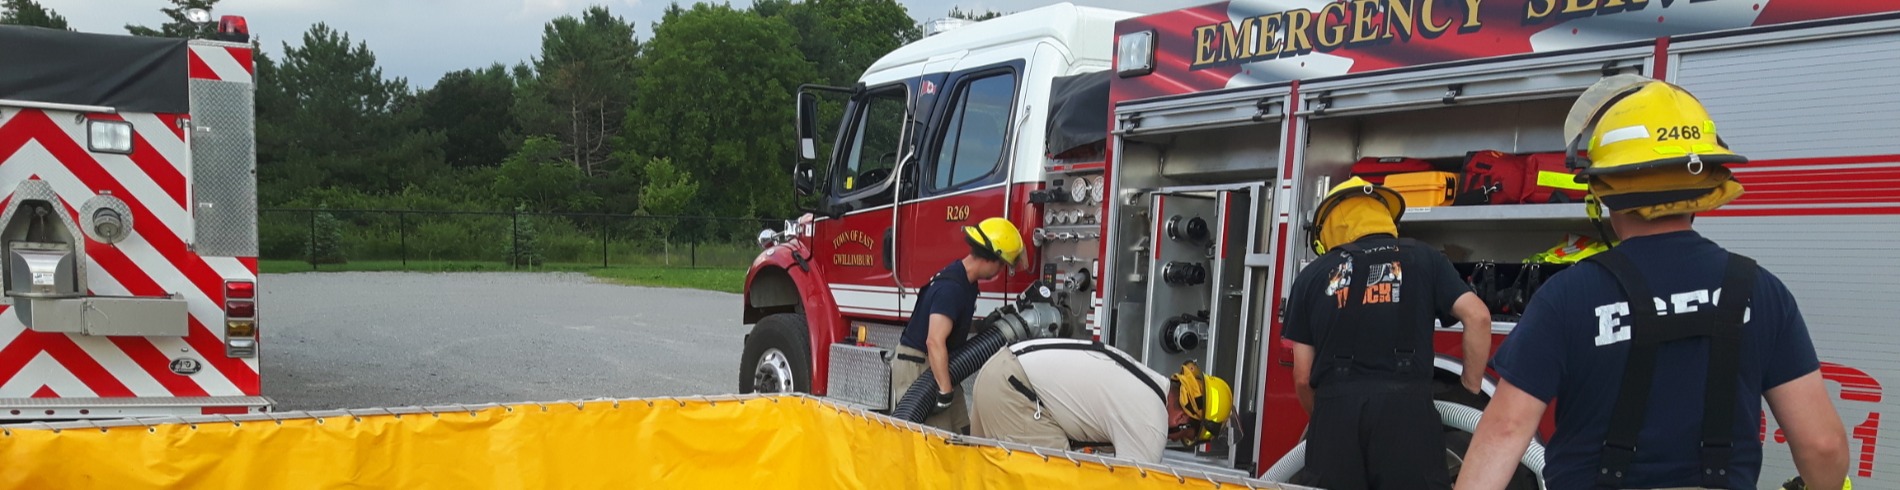 Firefighters preparing hose equipment